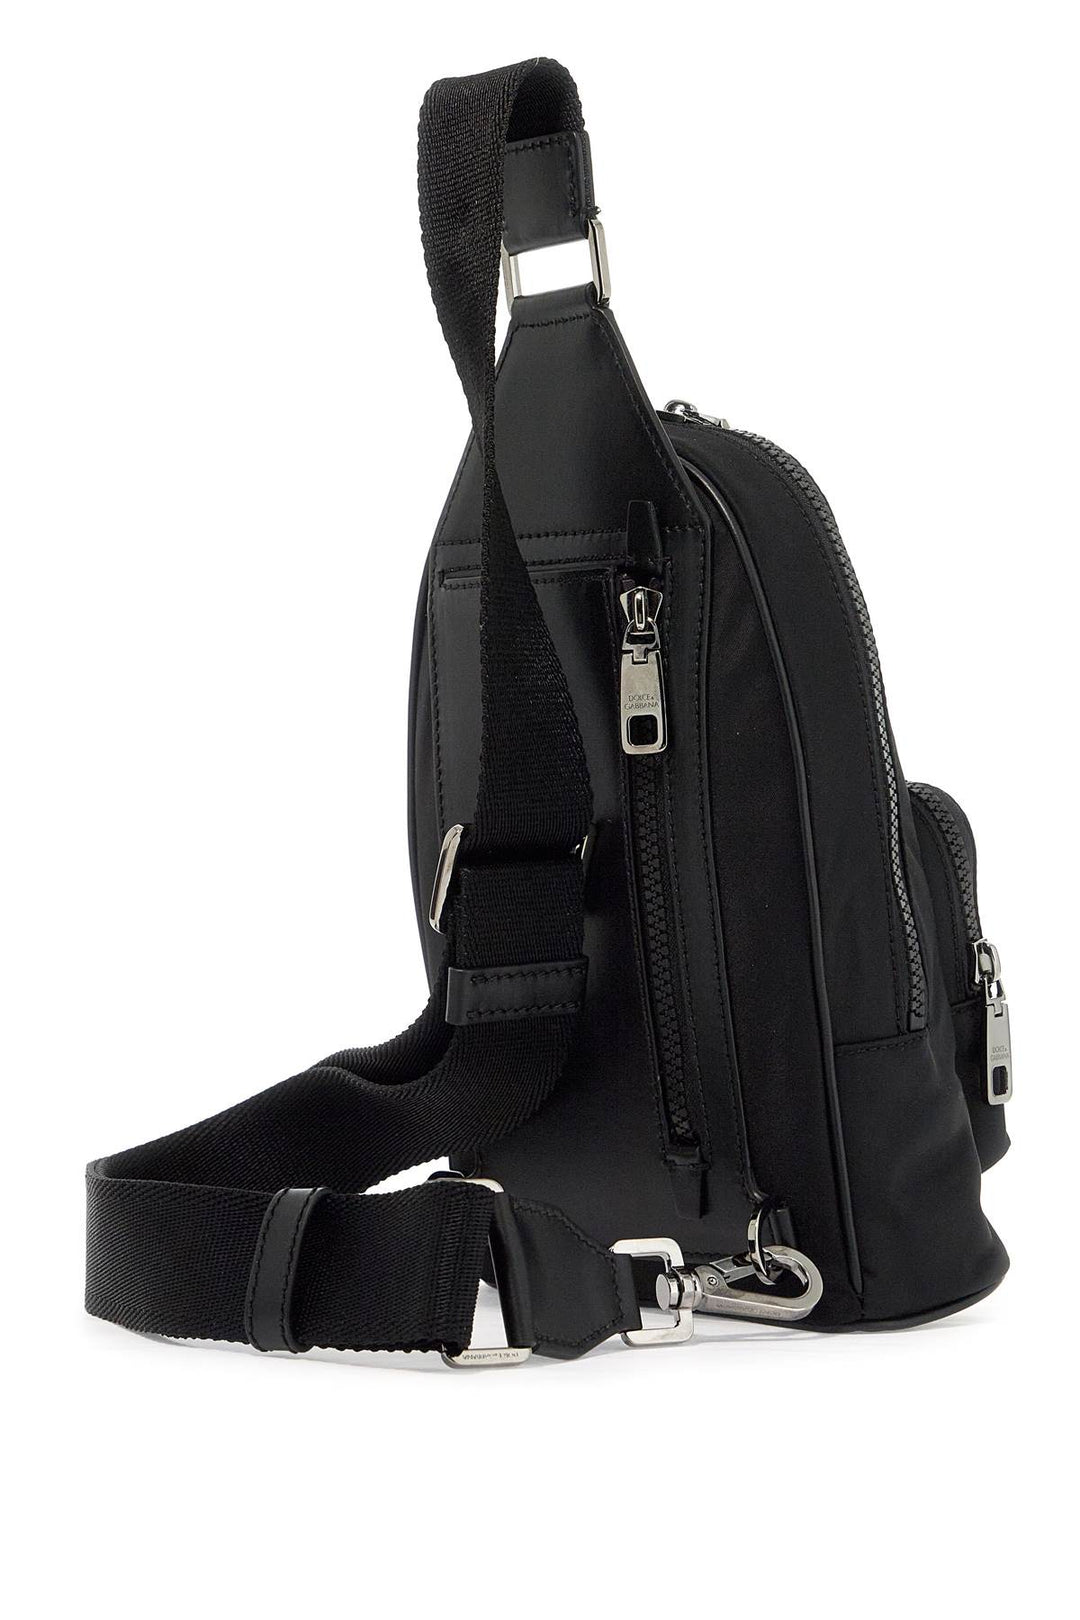 Dolce & Gabbana Nylon Shoulder Bag With Crossbody   Black